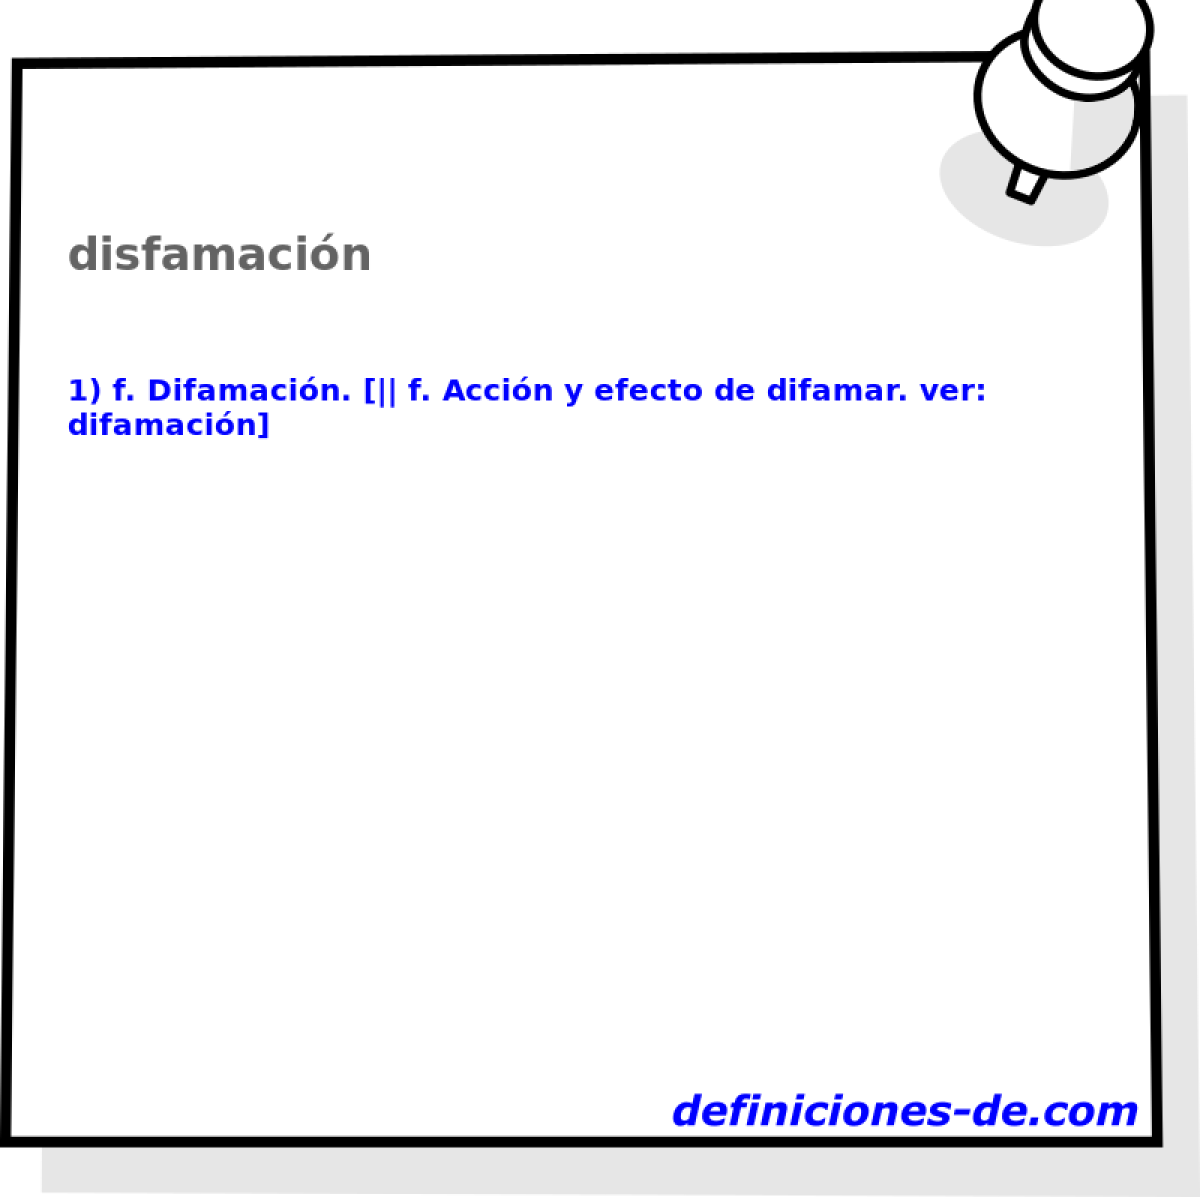 disfamacin 